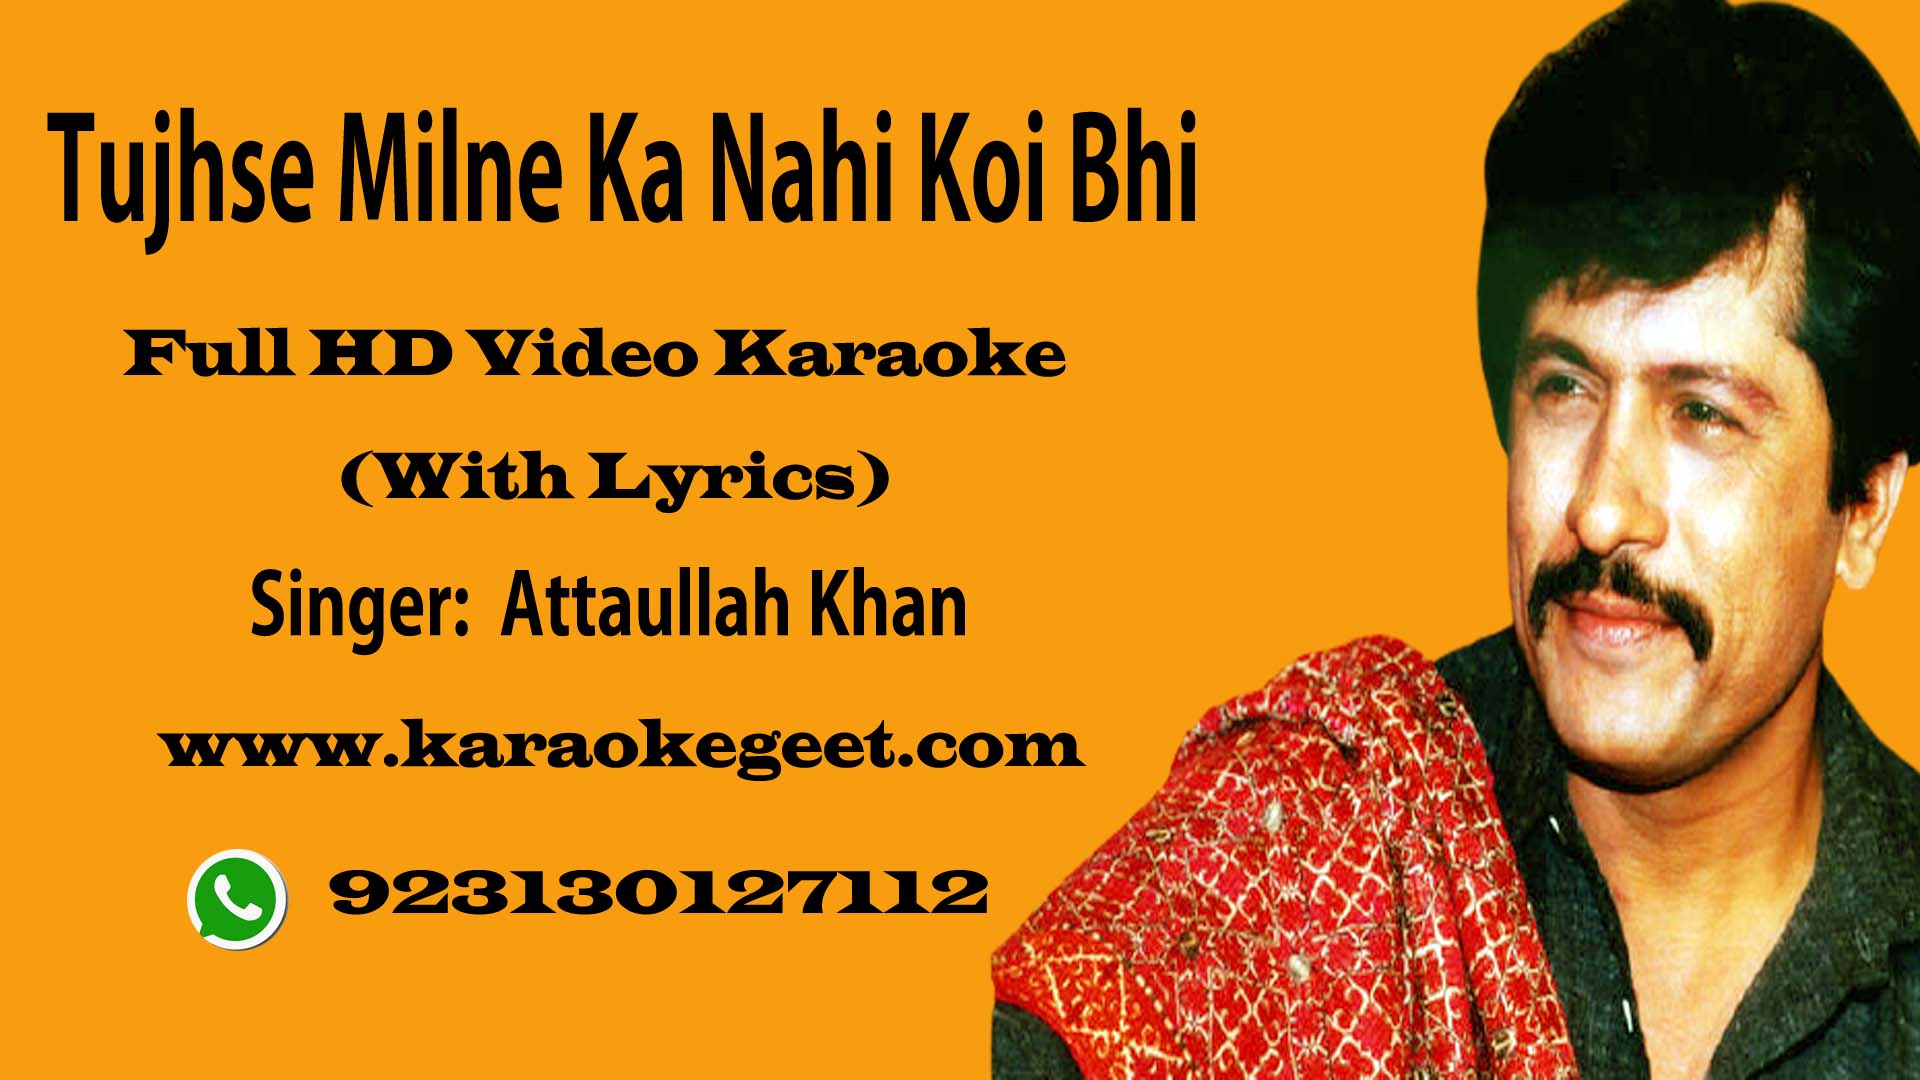 Tujh se milne ka nahi koi bhi imkaan janaan Video Karaoke